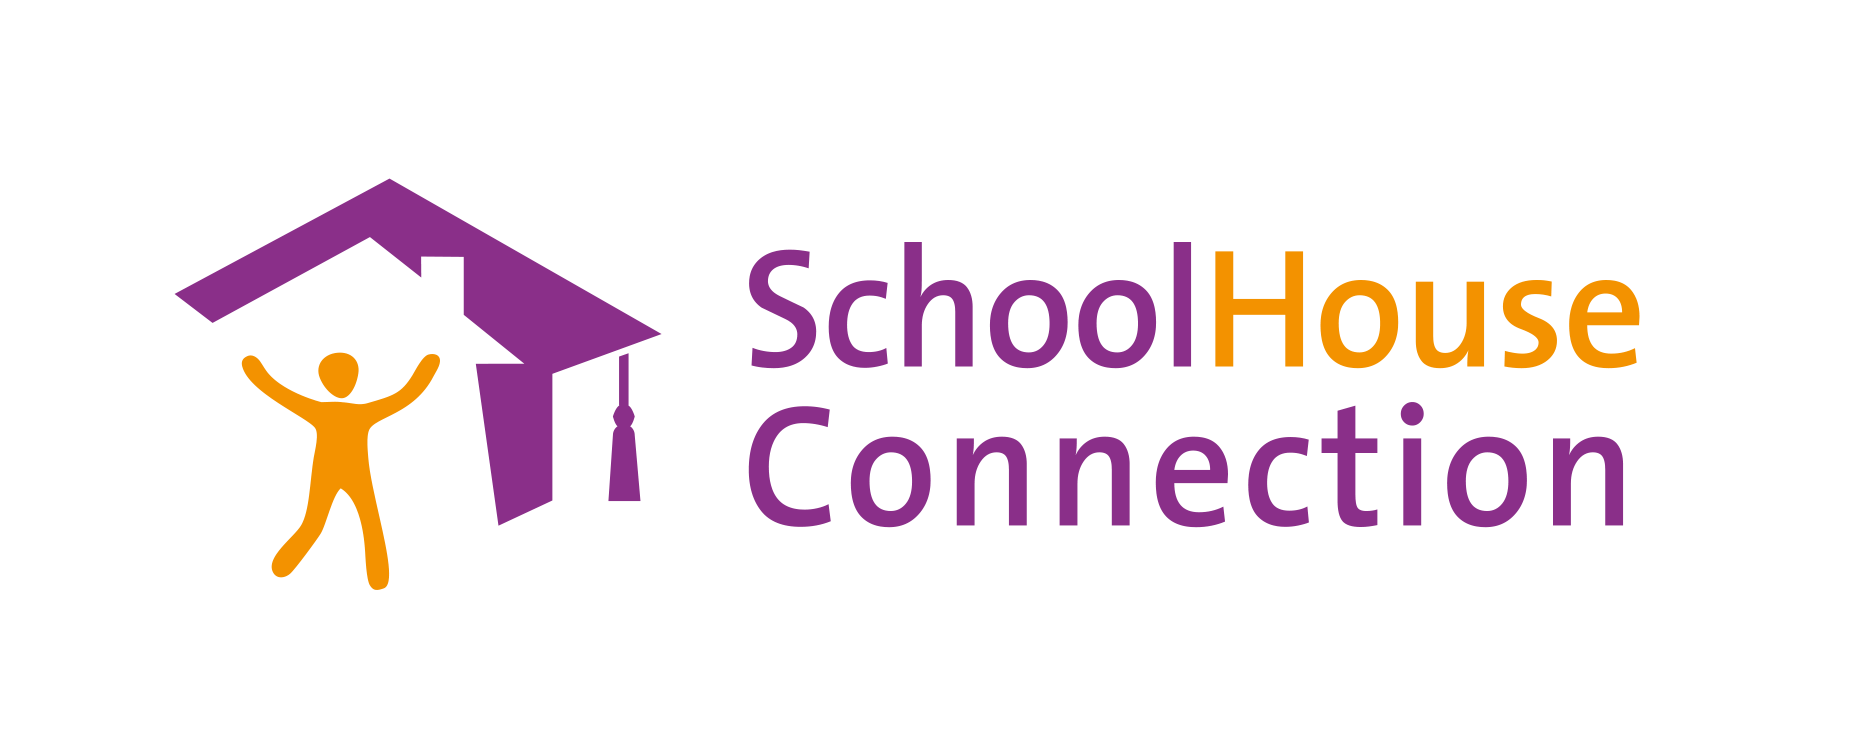 Schoolhouse Logo - SchoolHouse Connection | Overcoming Homelessness Through Education